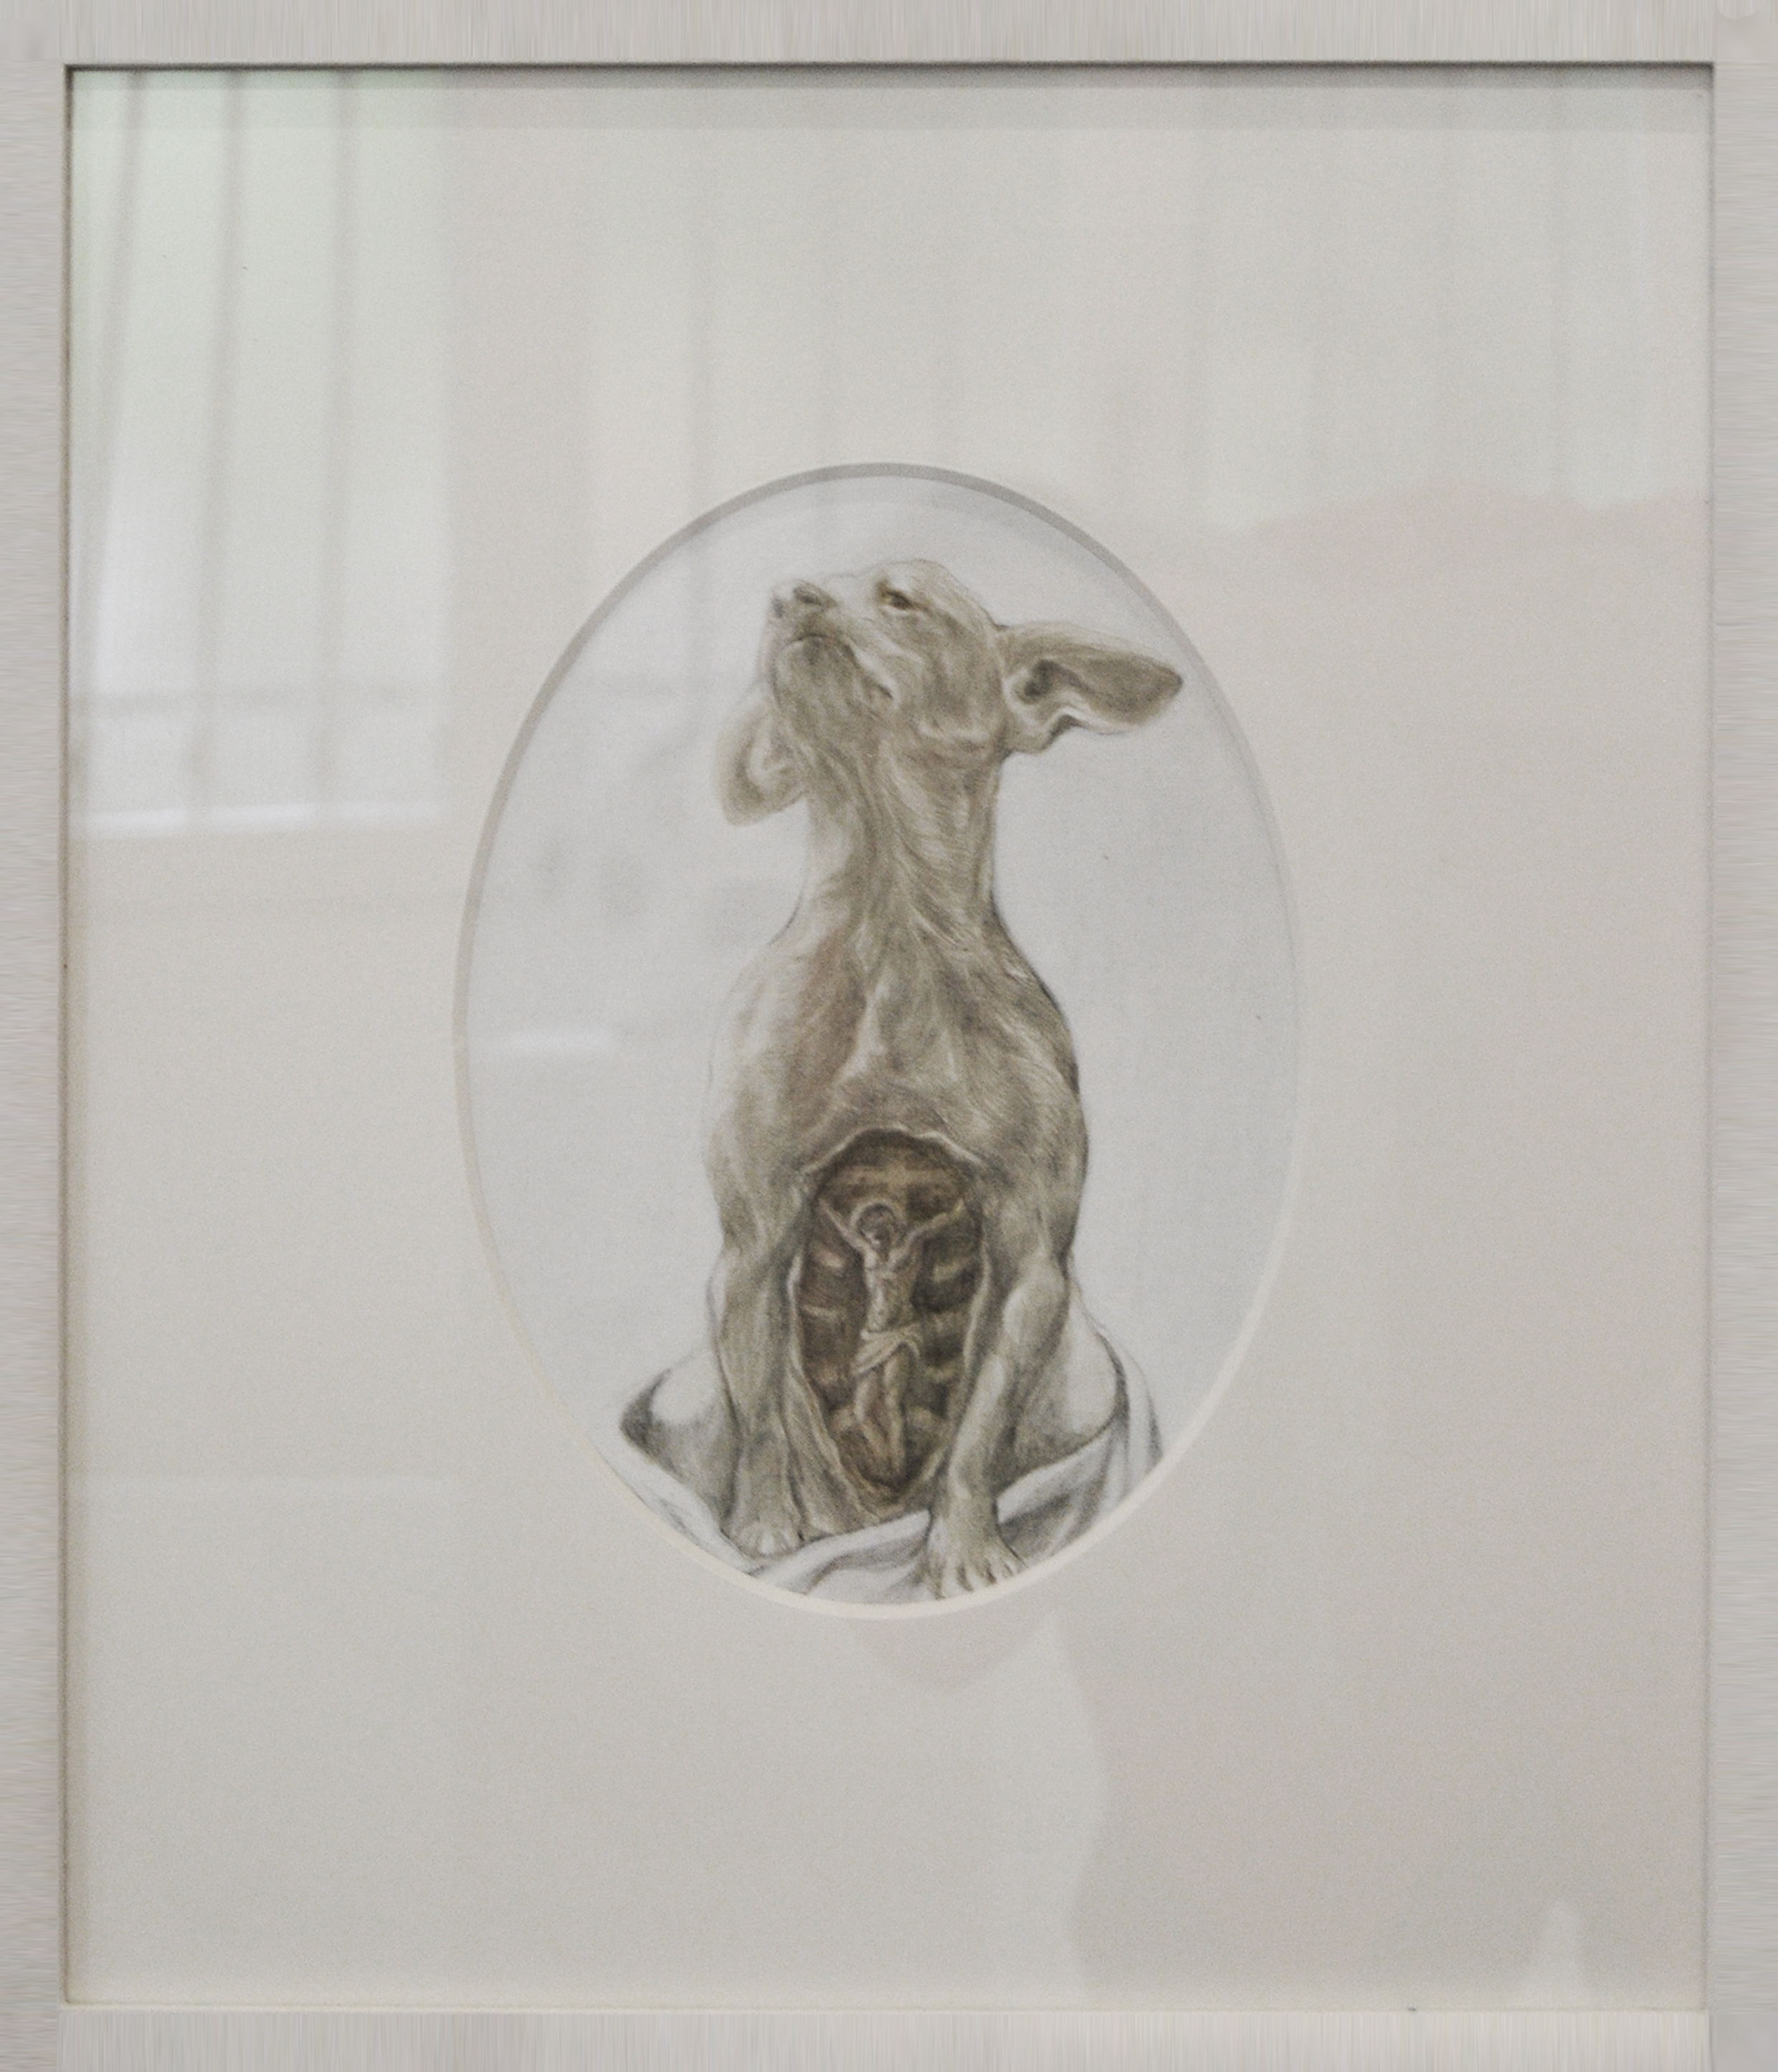 Cornelia Badelita, Anatomy of a dog, 2014, cm 31 x 35,5, punta d'argento su tela